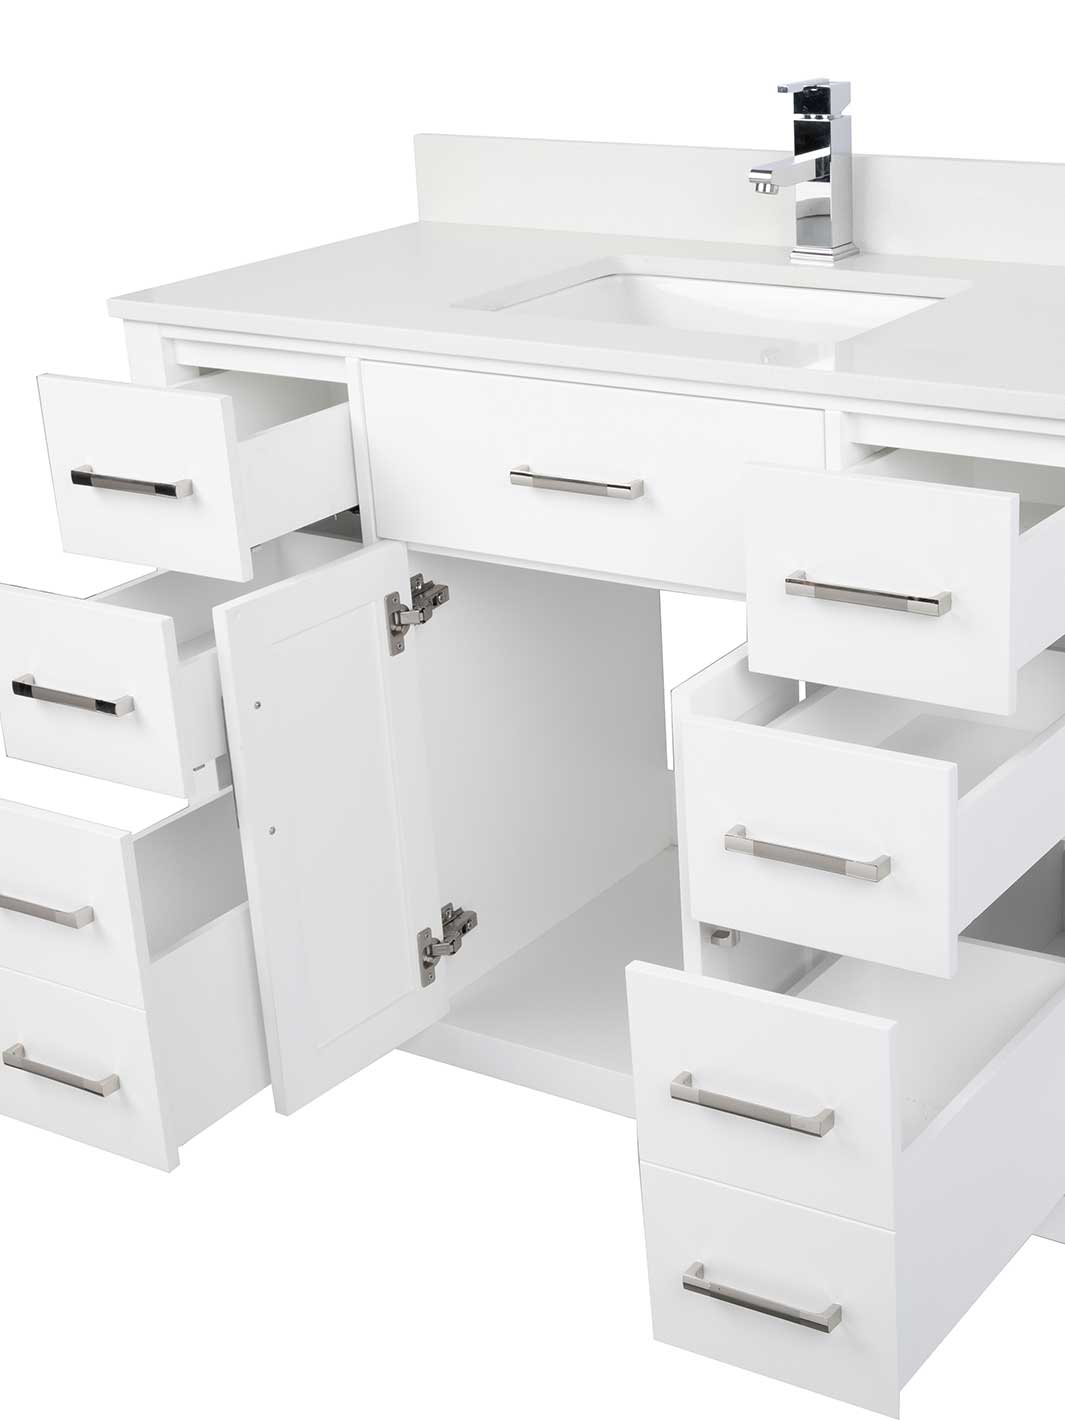 3 drawers on each side. deep bottom drawer